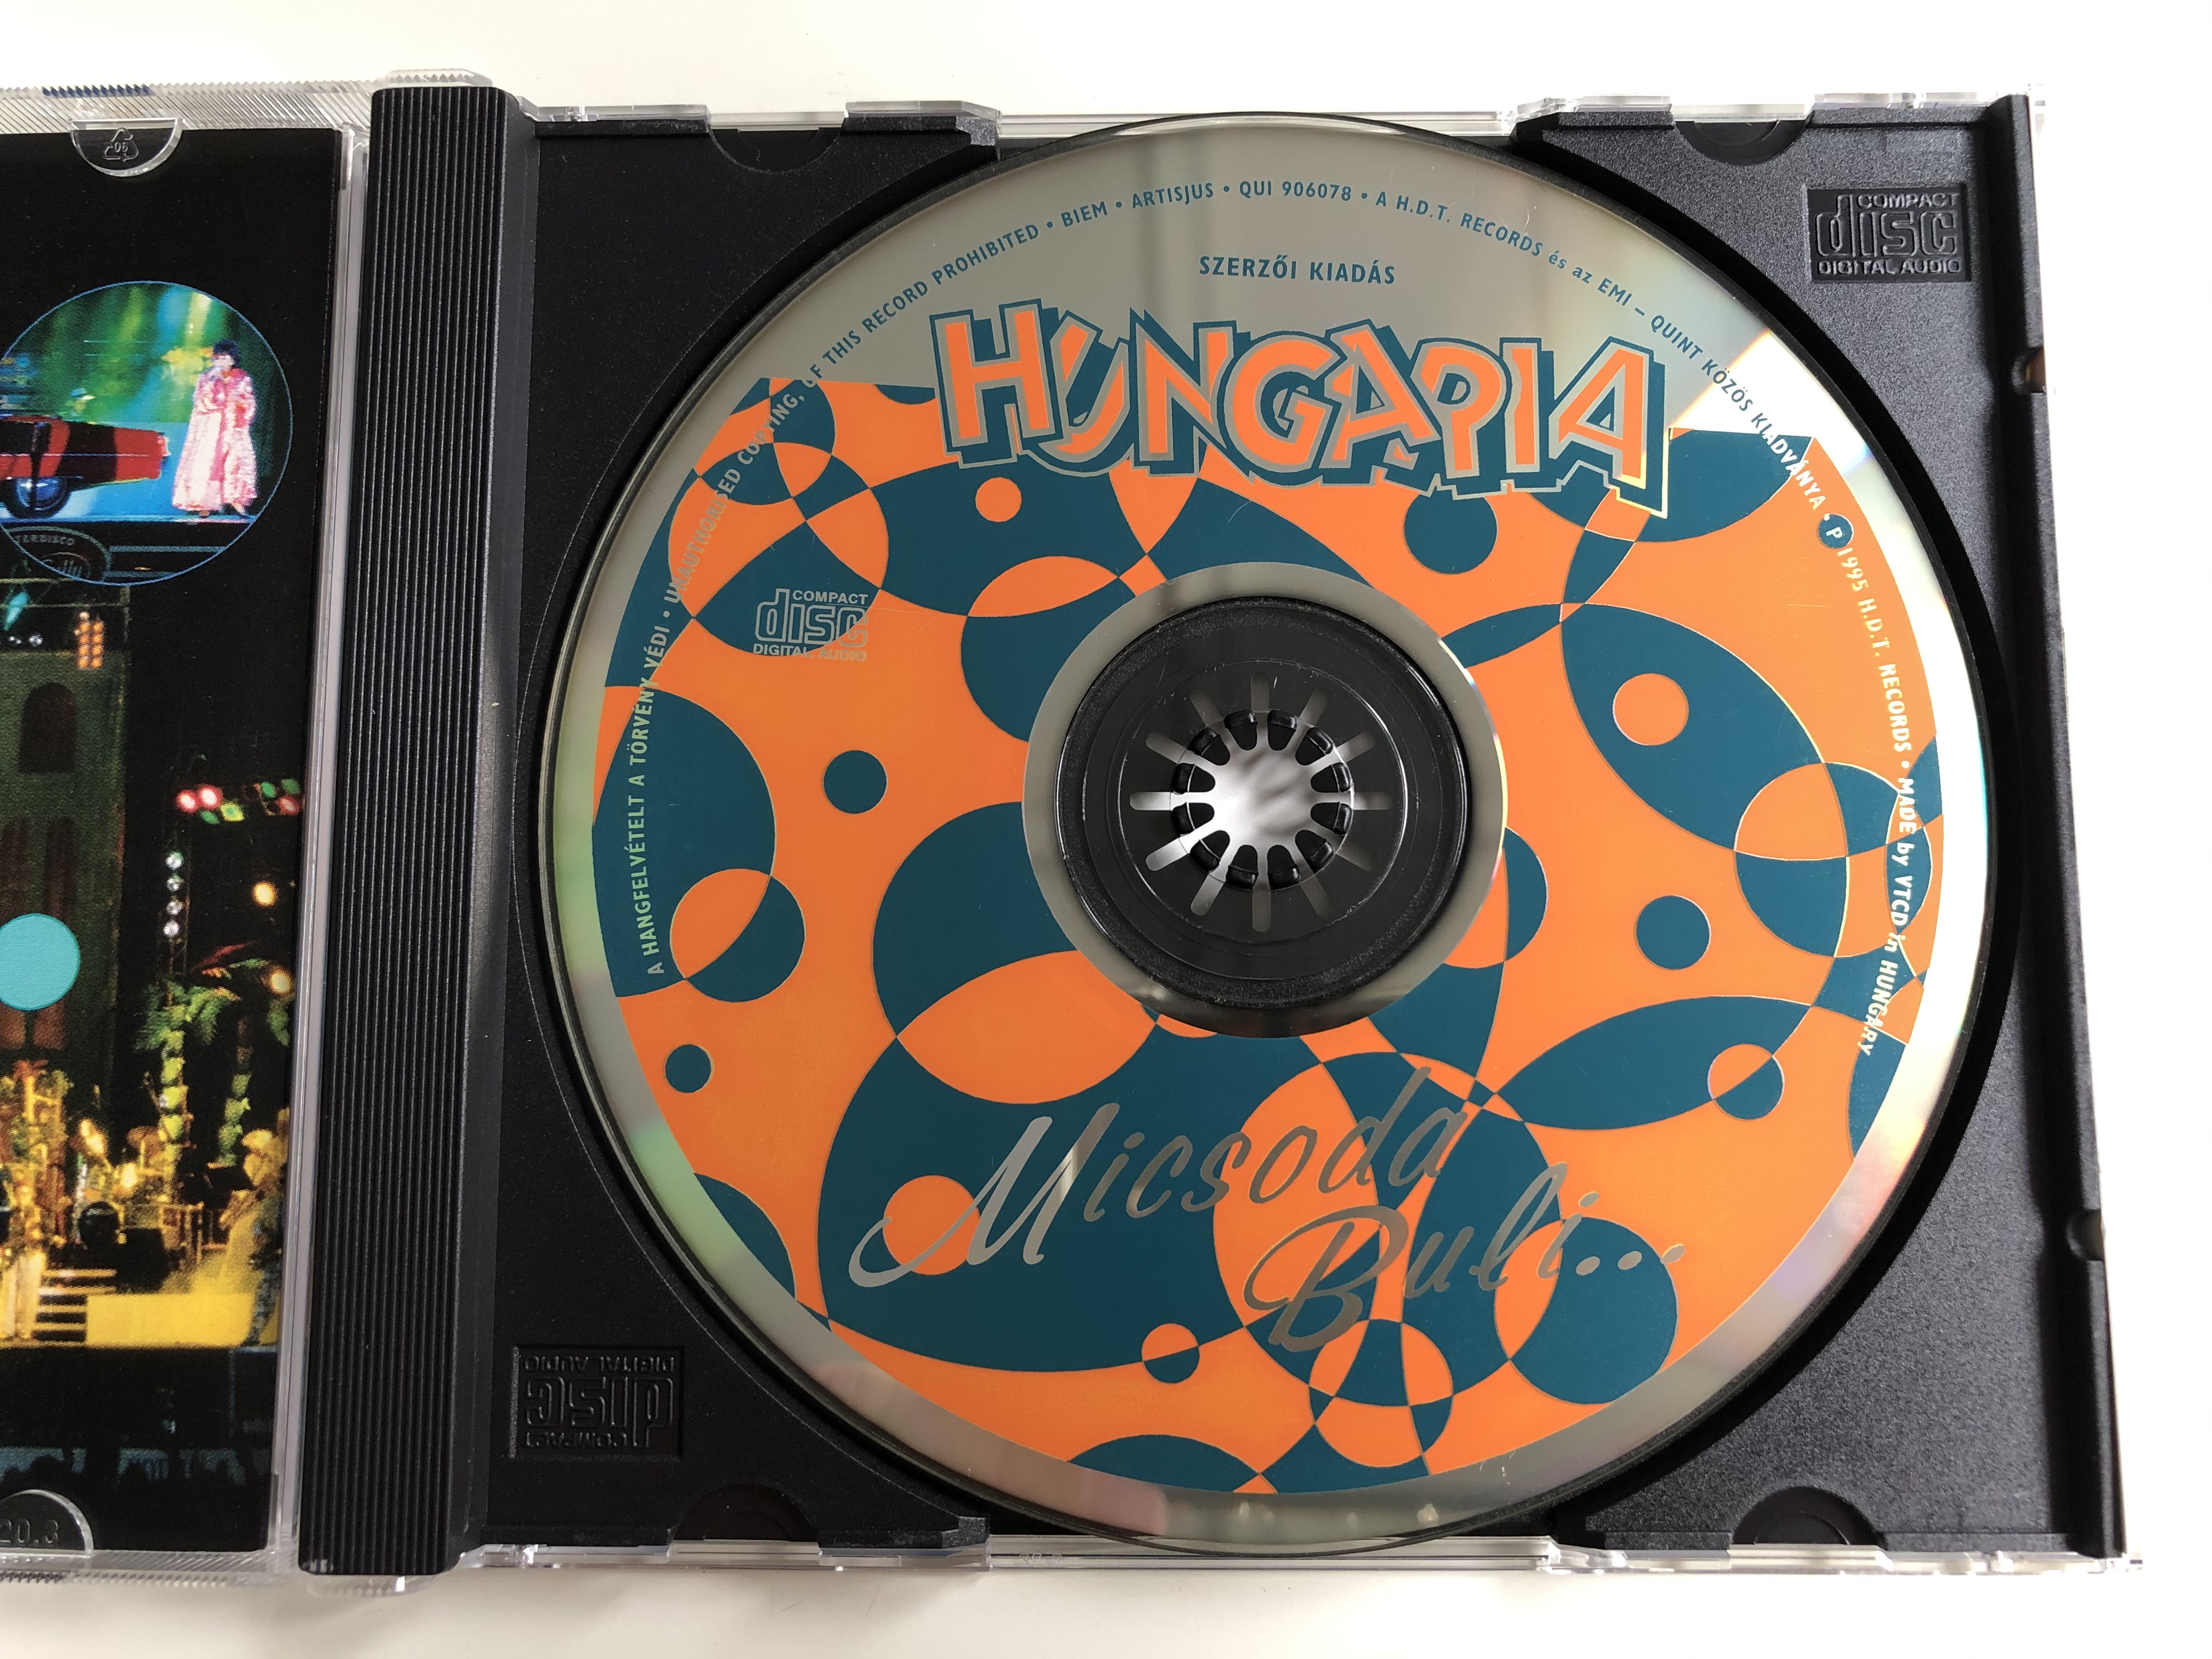 hungaria-micsoda-buli...-n-pstadion-1995-h.d.t.-records-audio-cd-qui-906078-7-.jpg